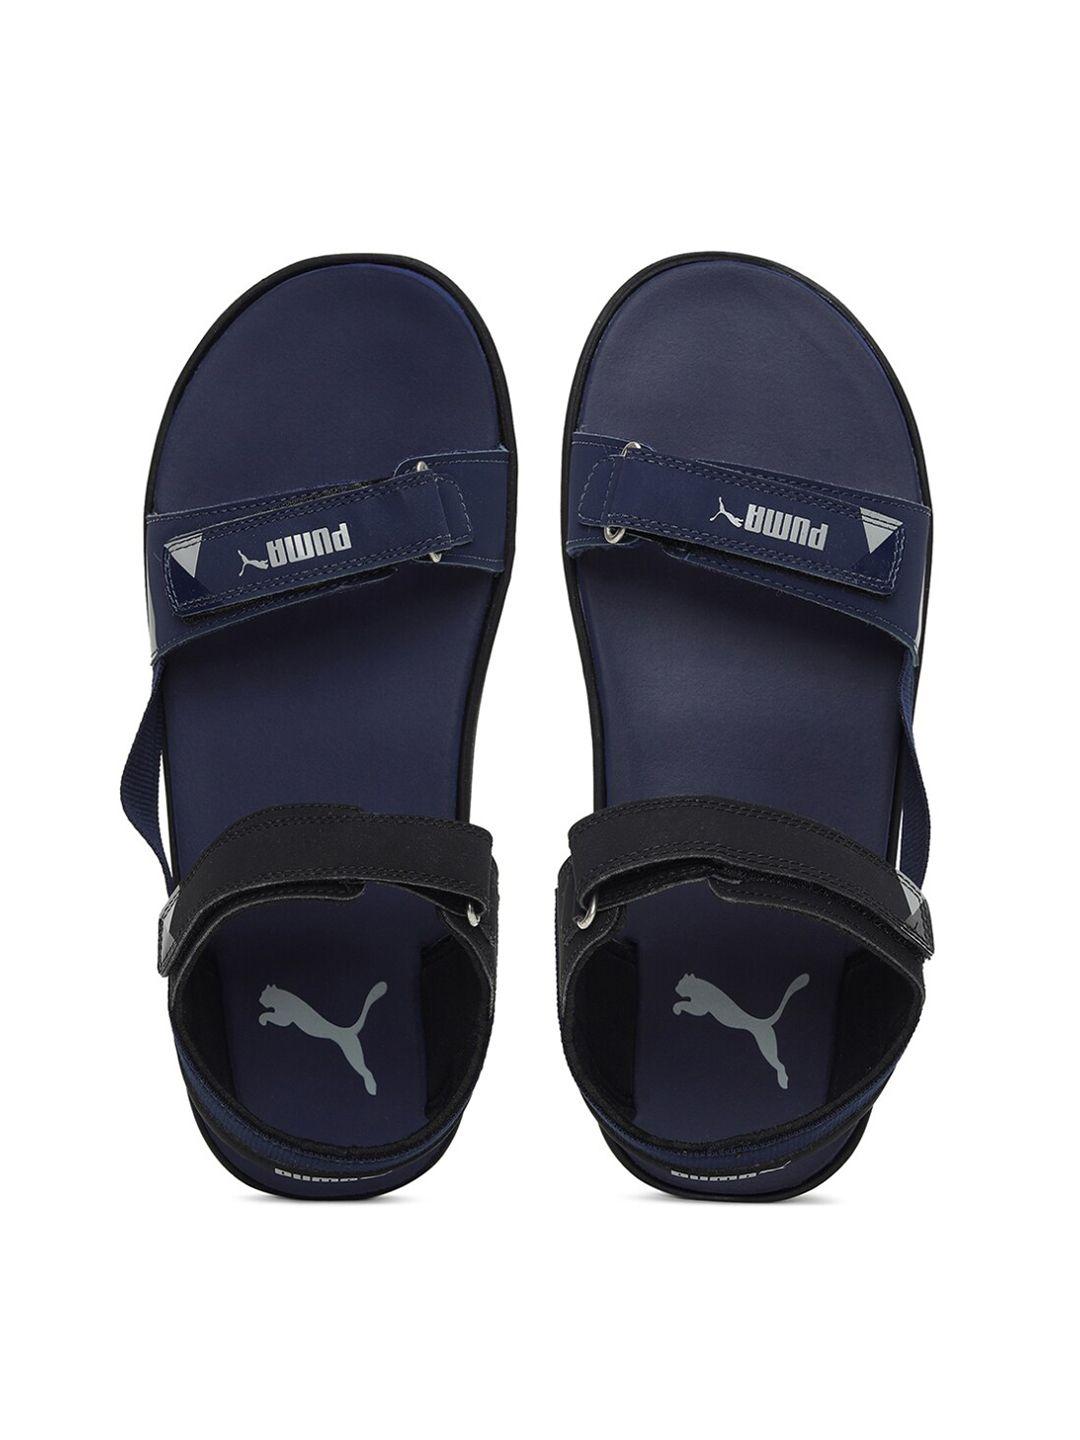 puma unisex navy blue solid comfort sandals